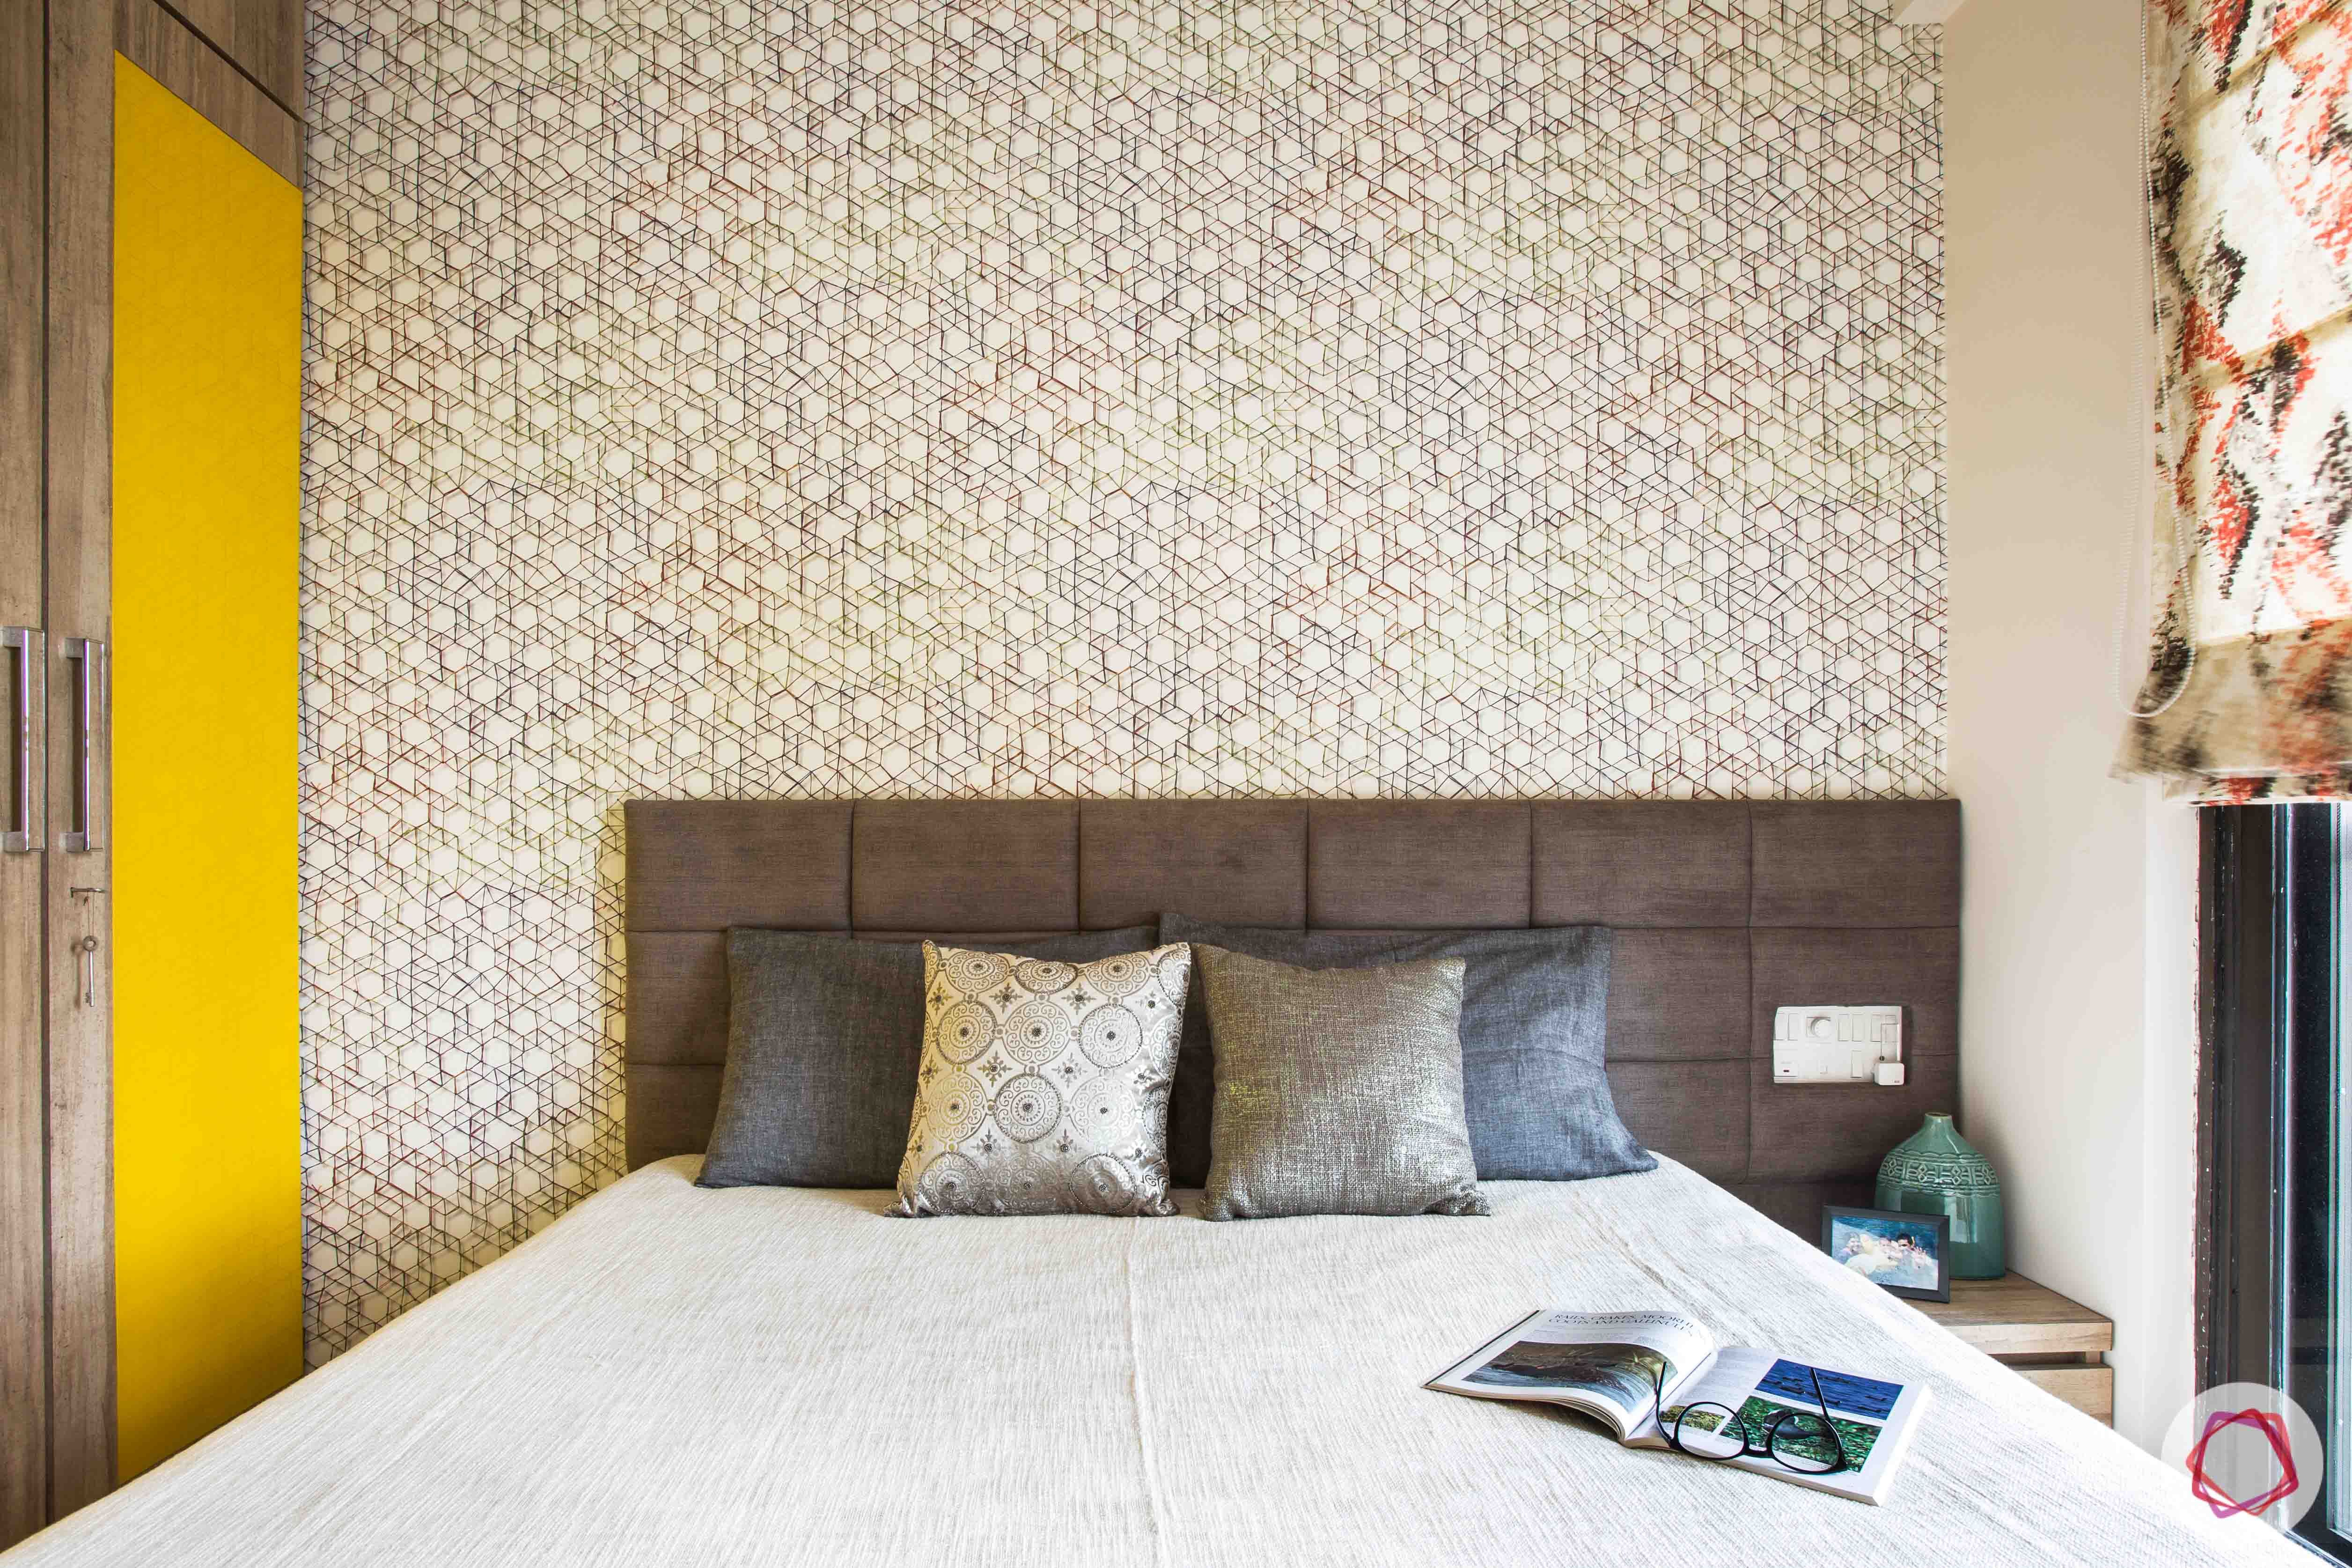 hexagonal-tile-wallpaper-pattern-bedroom